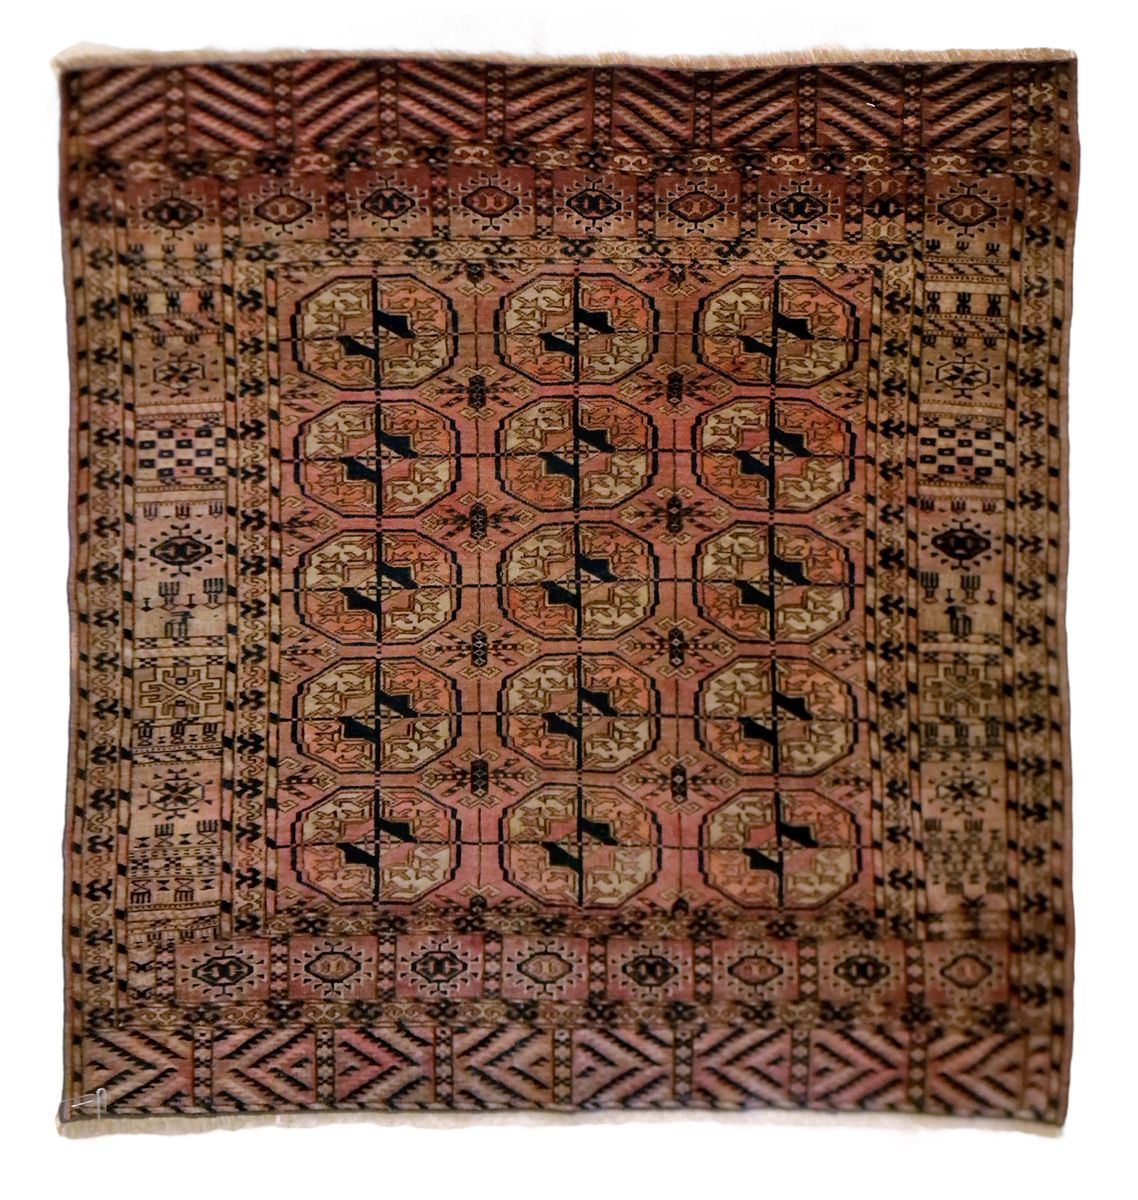 TAPIS YAMUT-BOUKHARA Decoración geométrica, buen estado.
Tamaño: 100 x 115 cm

A&hellip;